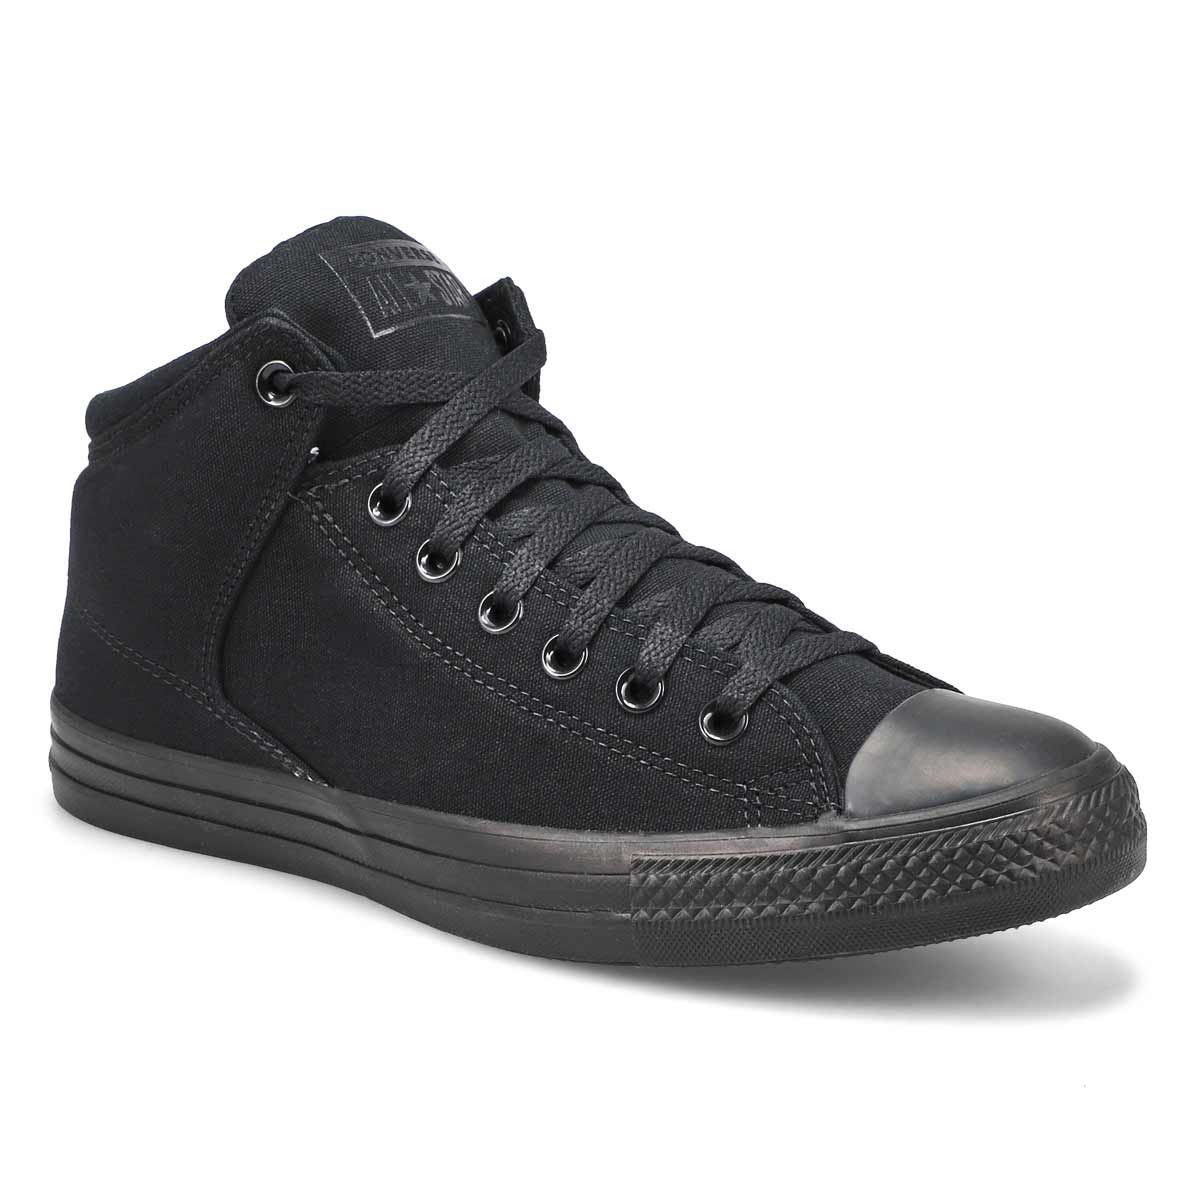 Men's Chuck Taylor All Star High Street Sneaker - Black/Black